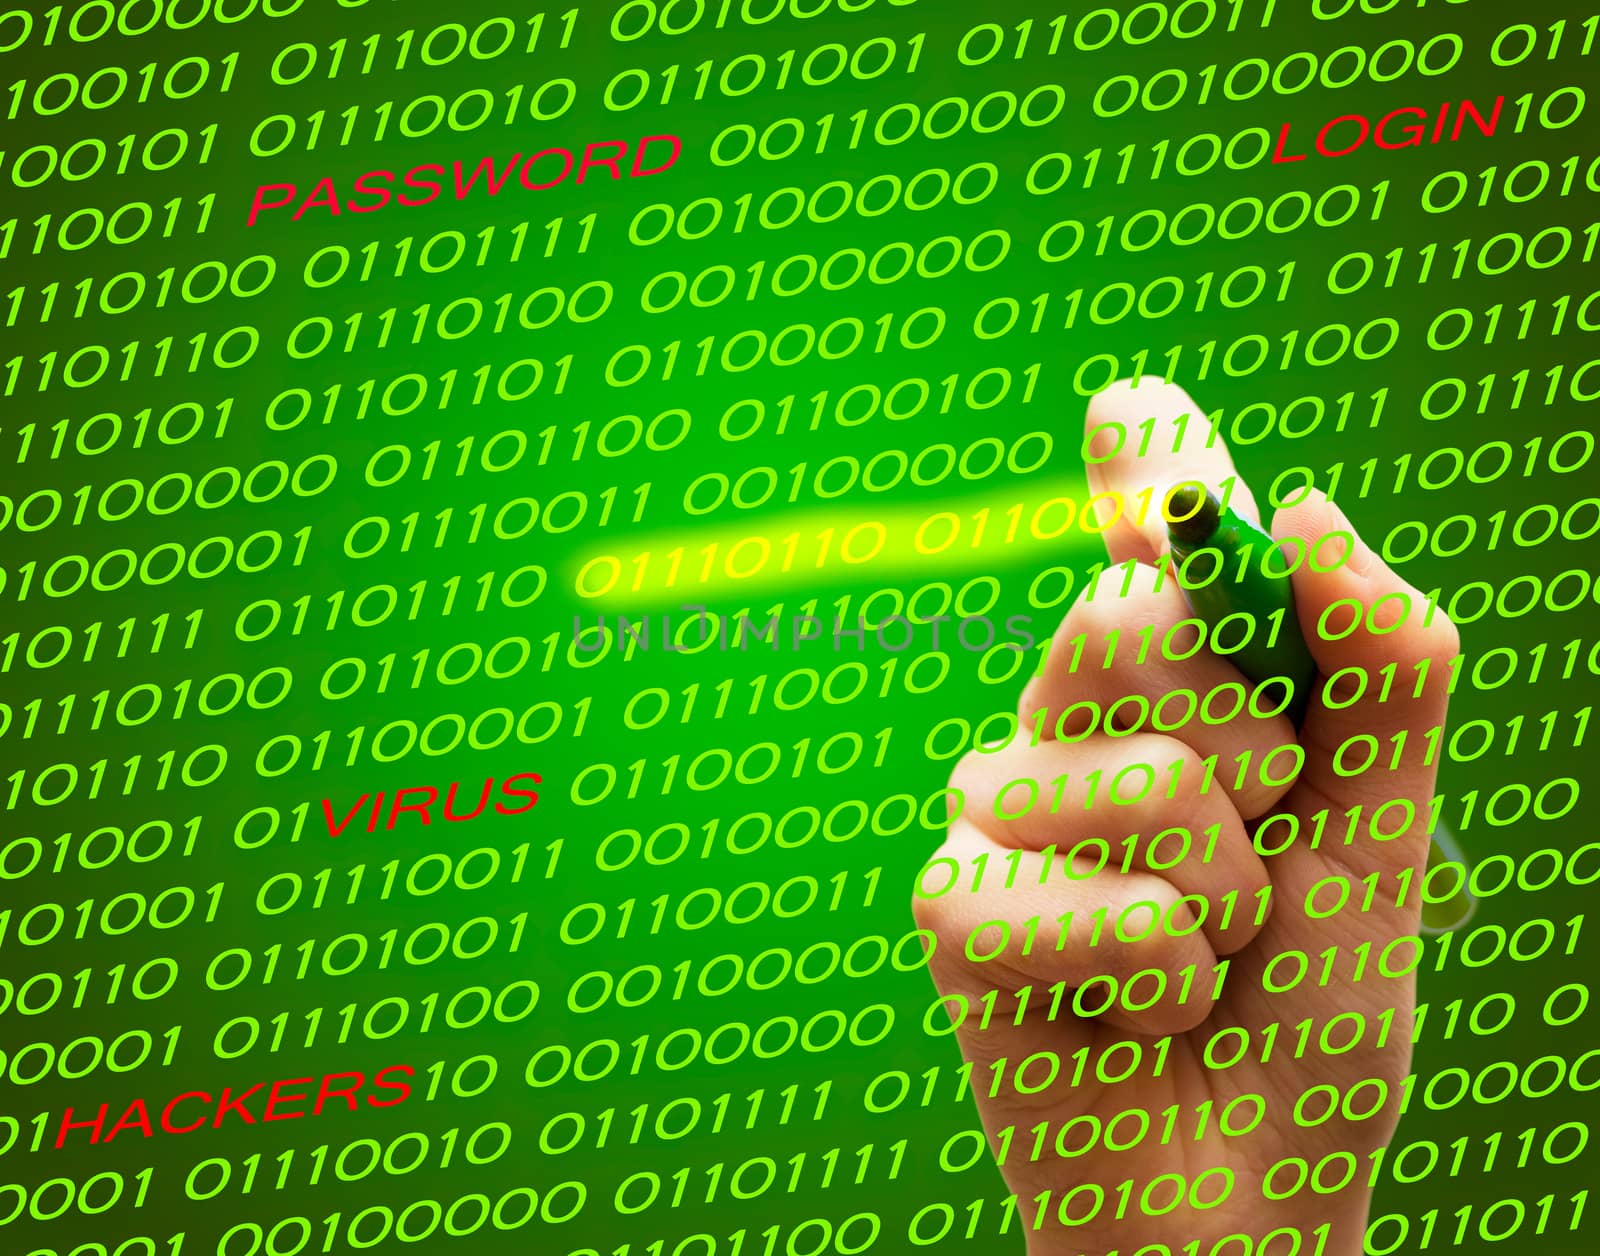 Protect password login virus hackers hand binary text by Havana